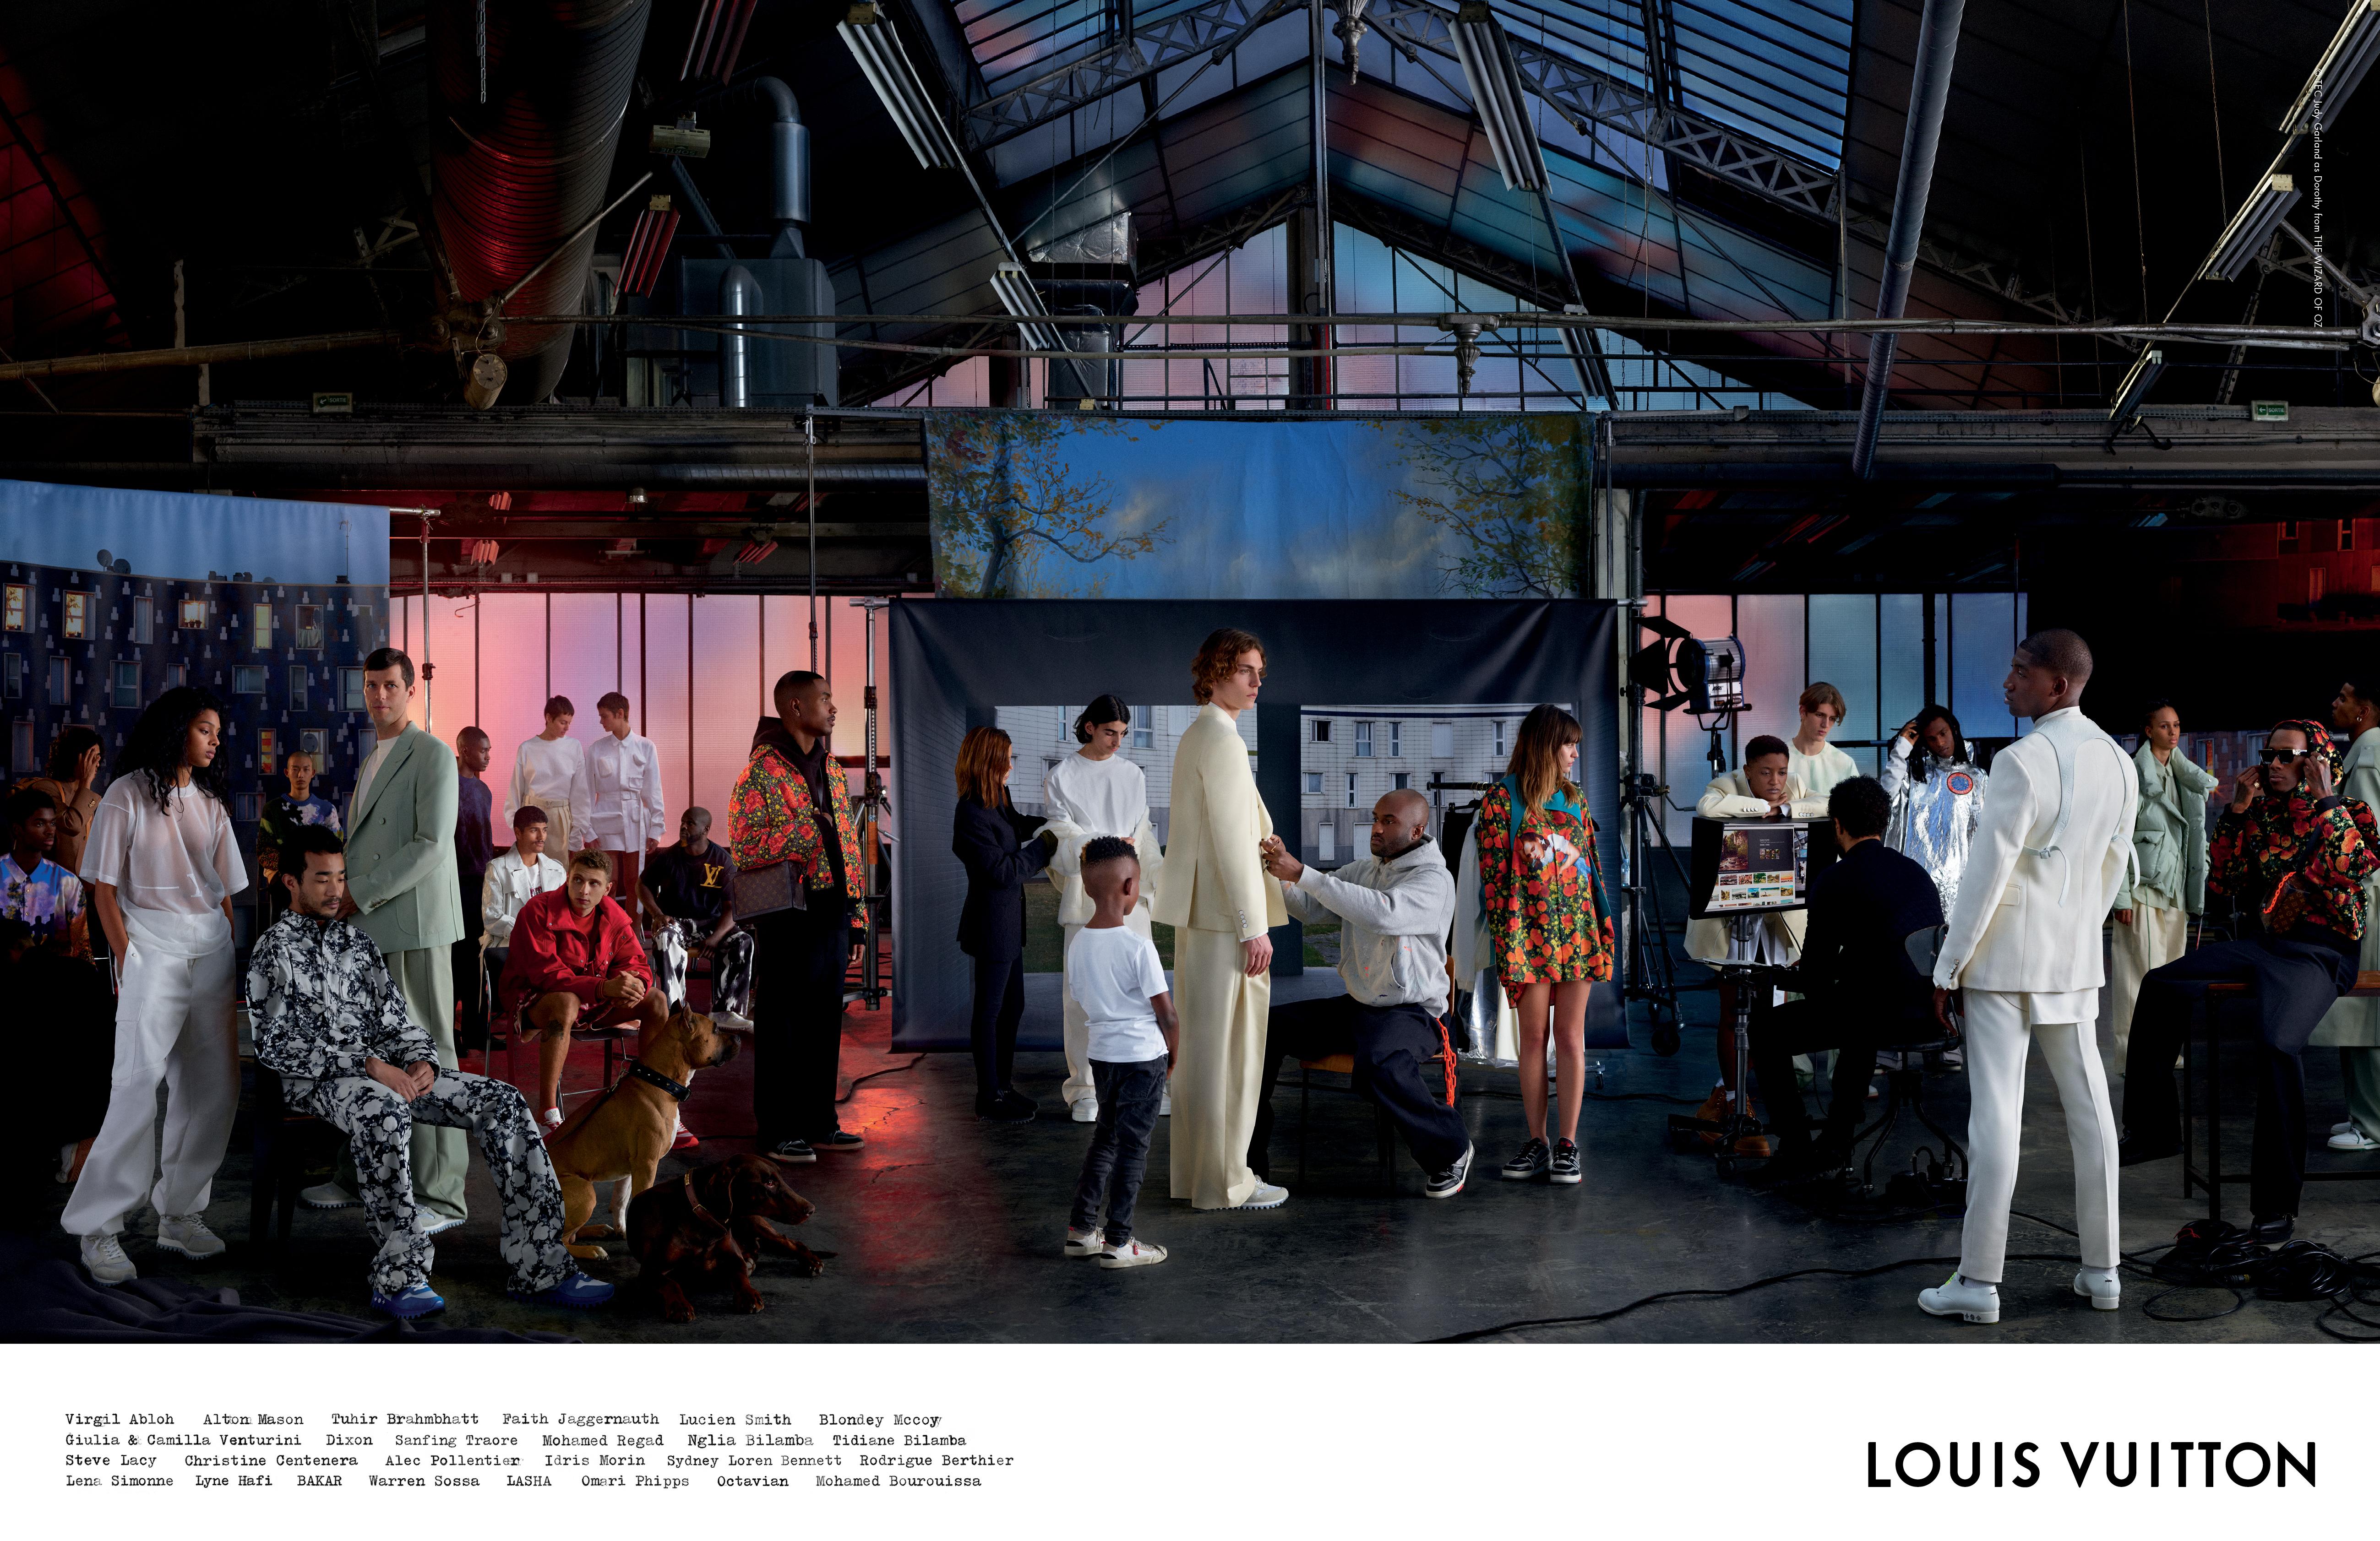 Louis Vuitton Au Hasard + Sur La Route Preview, First Impressions Review +  Samples Giveaway 